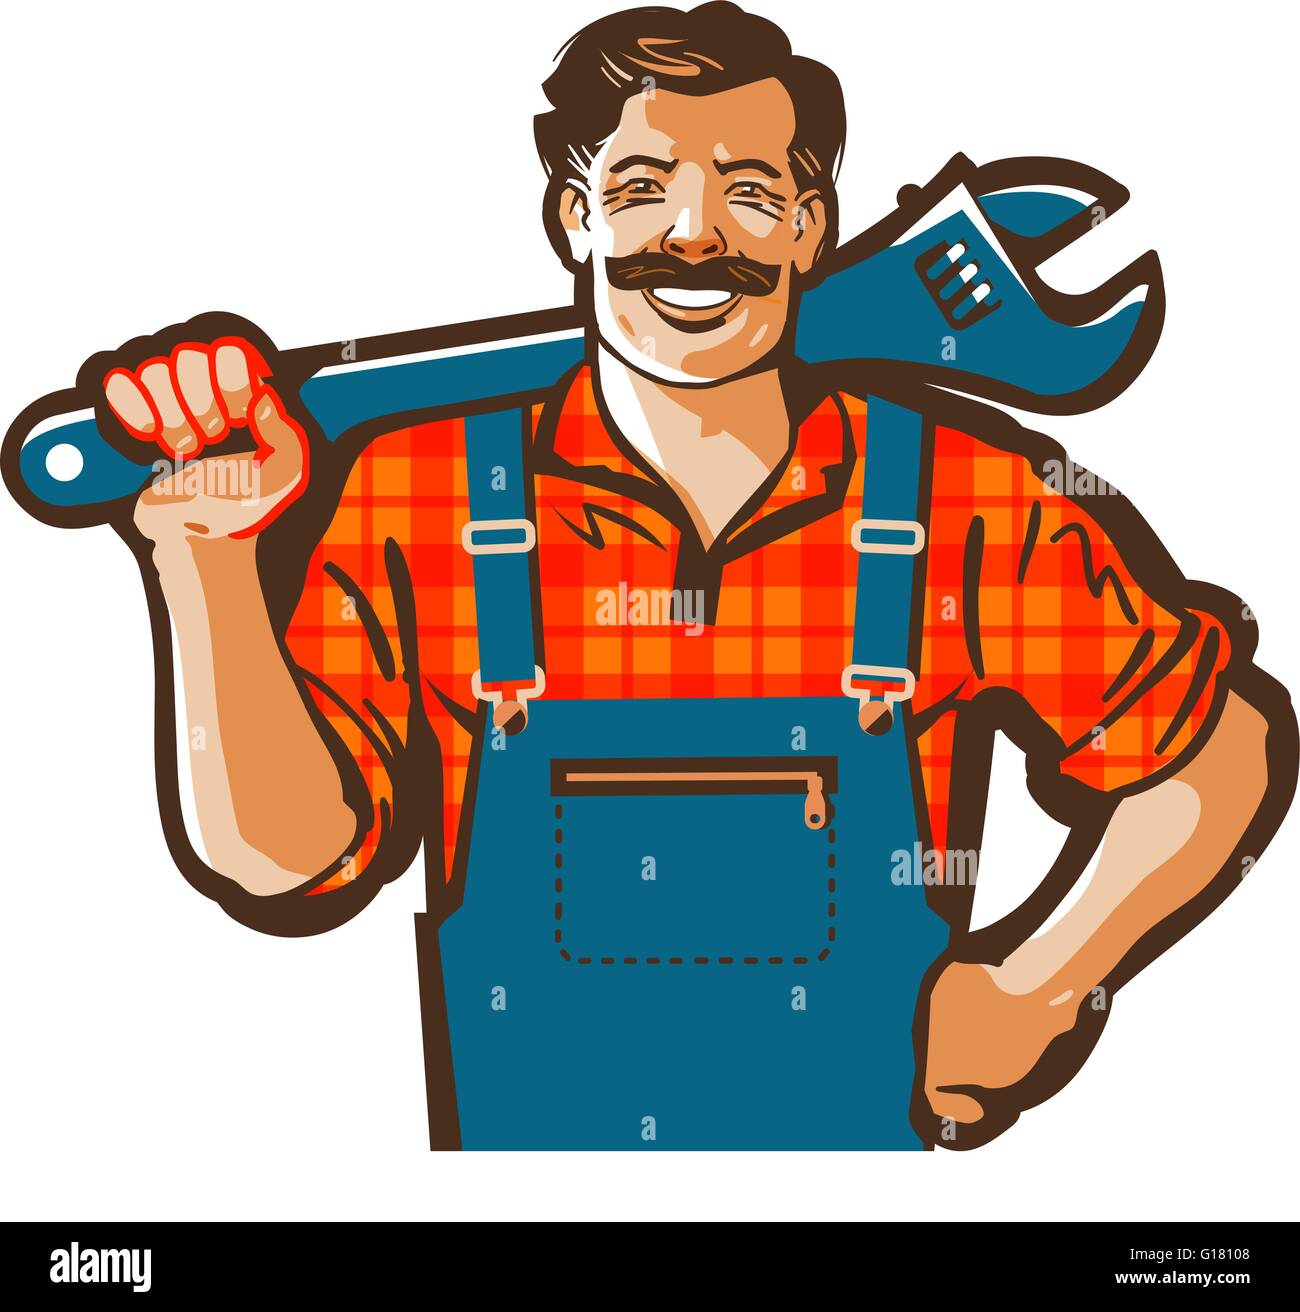 plumber vector logo. wrench or handyman icon Stock Vector